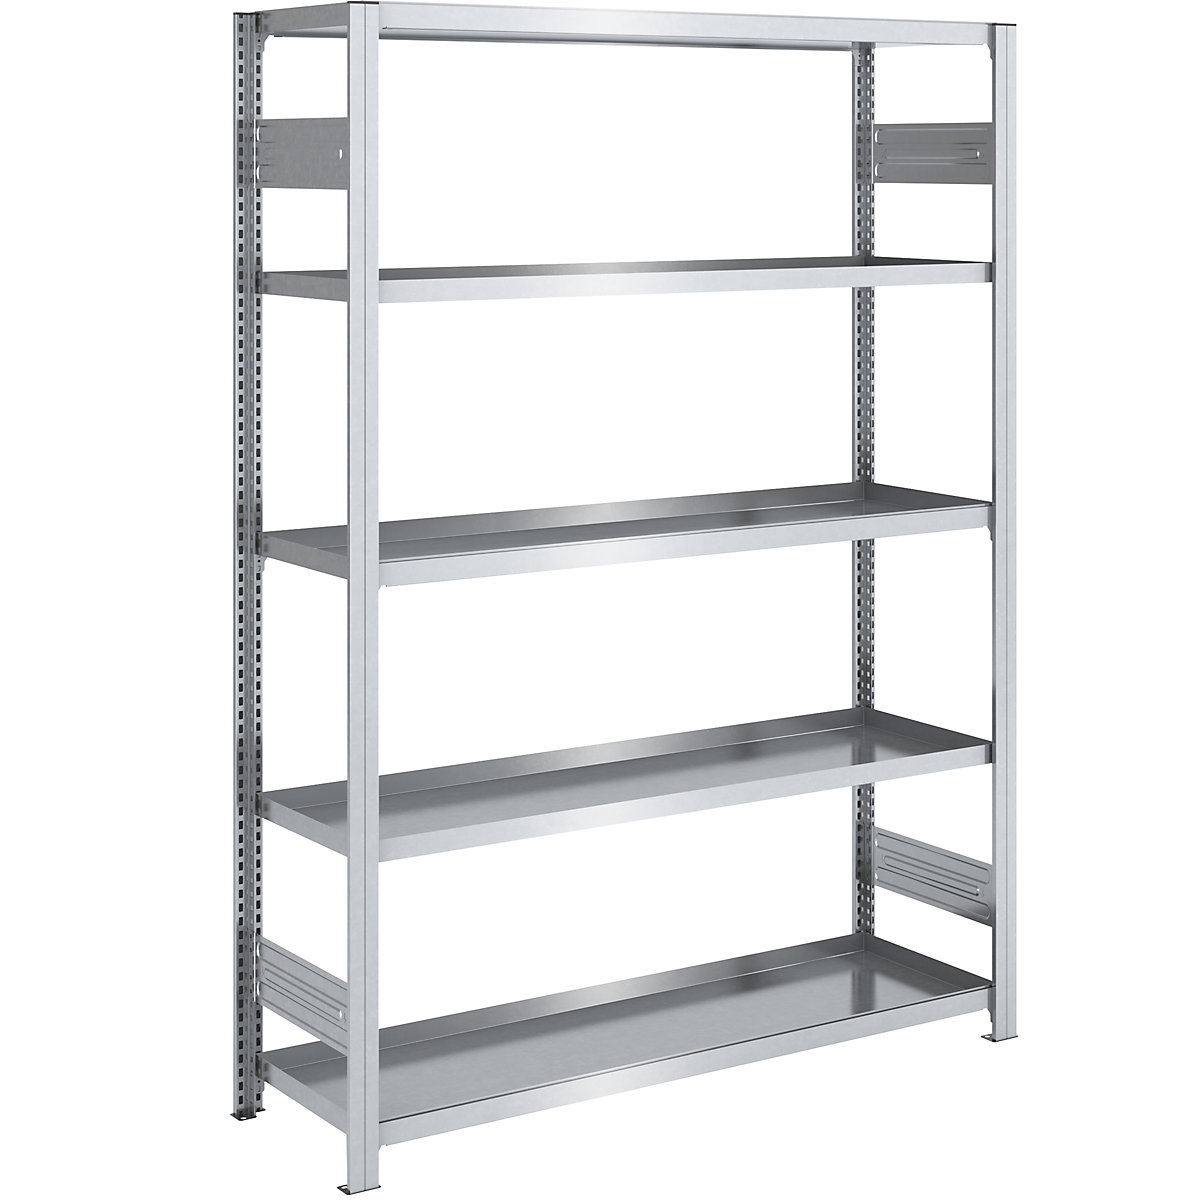 Tray shelf unit – hofe, shelf unit height 2000 mm, tray width 1300 mm, tray depth 500 mm, standard shelf unit